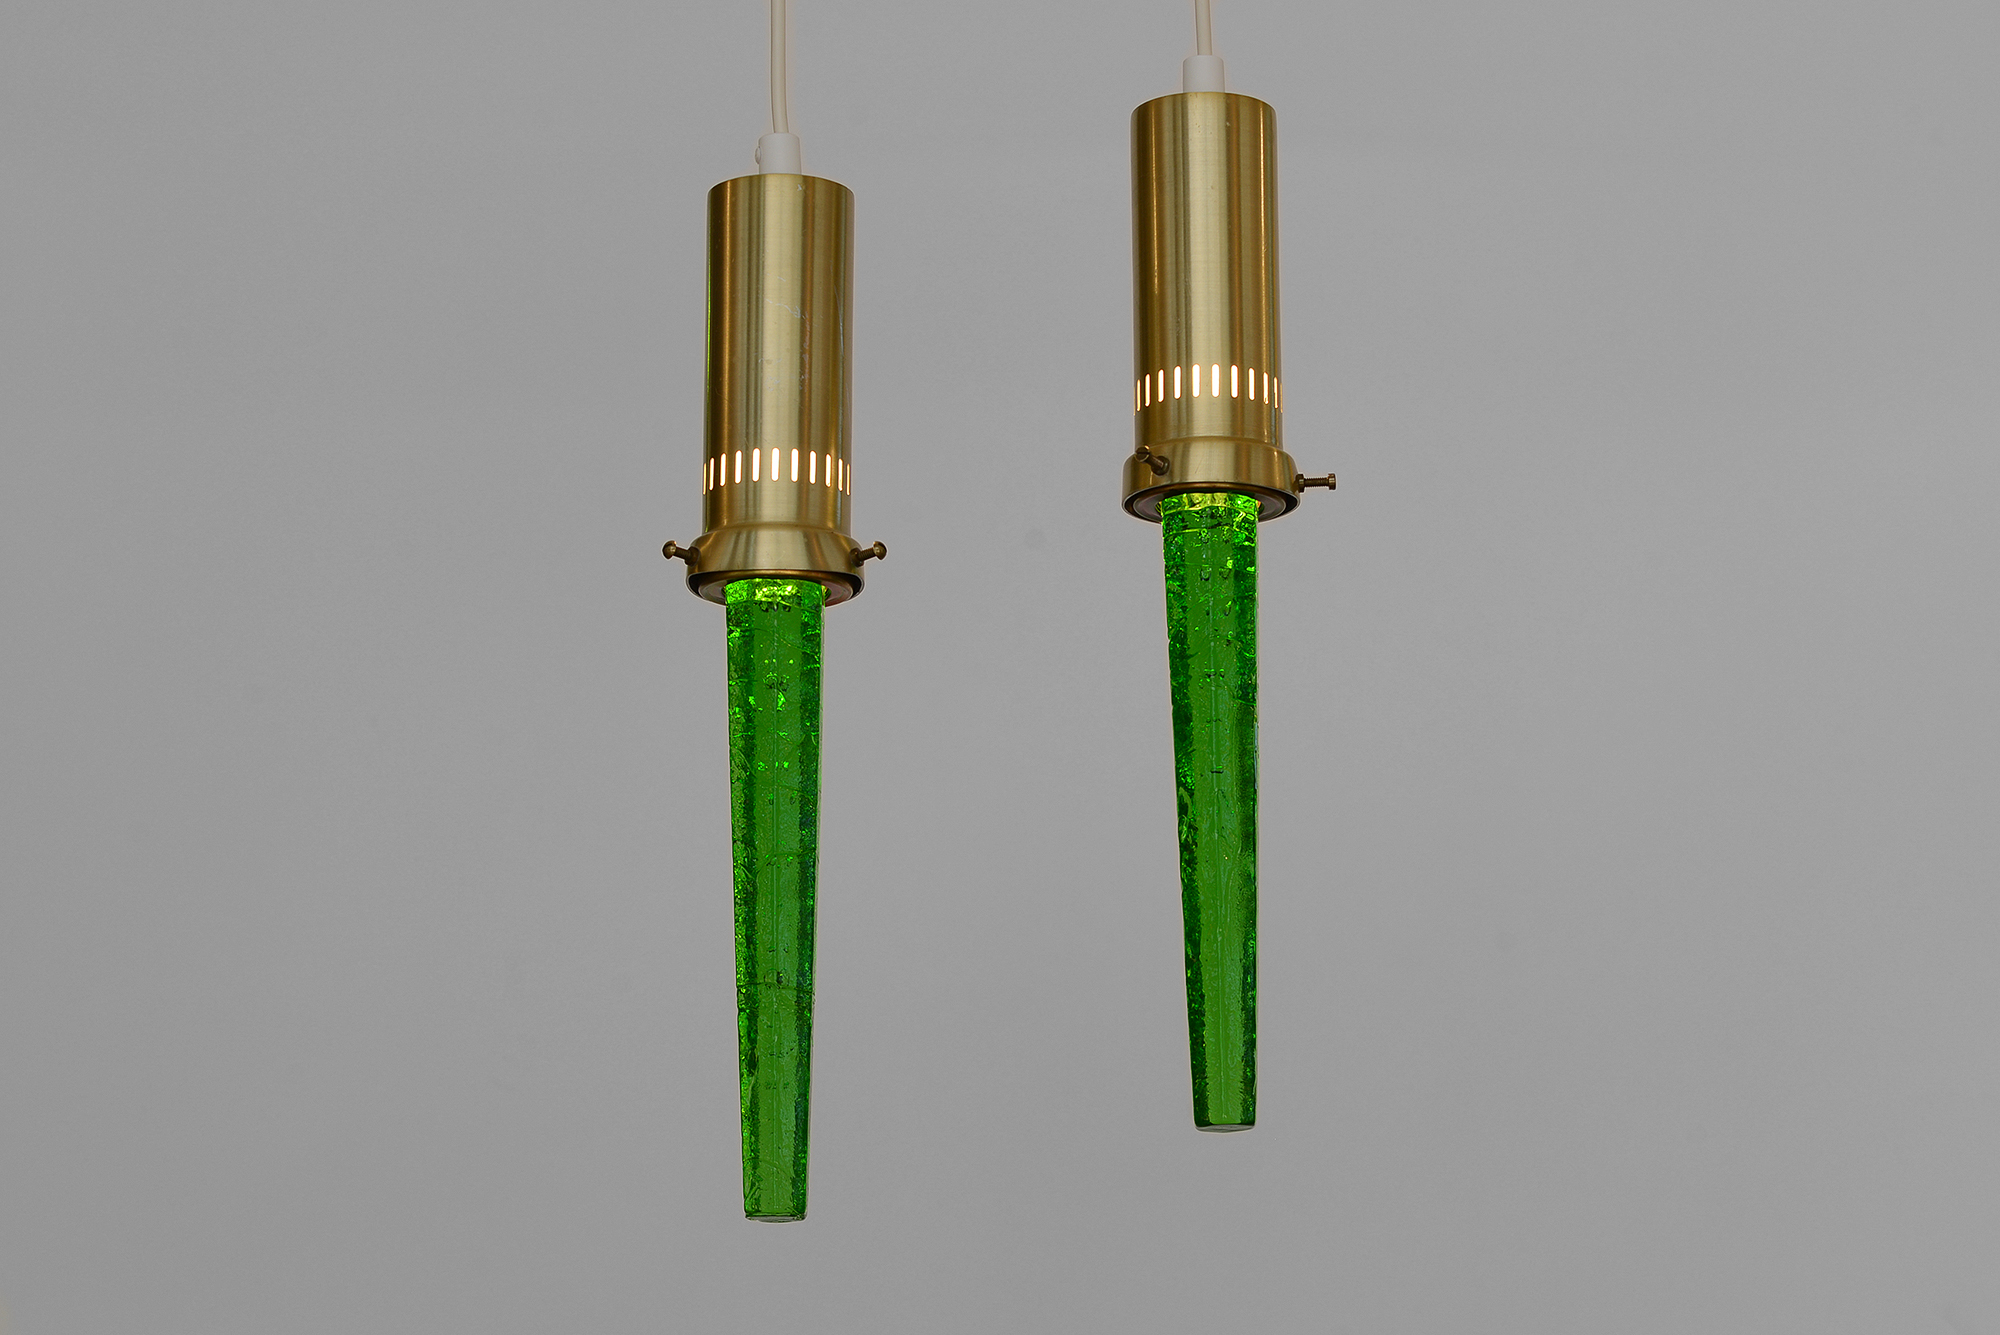 Pair of pendant lights “Istappen” Ateljé 1960s by Engberg. Sweden – HAGBLOM